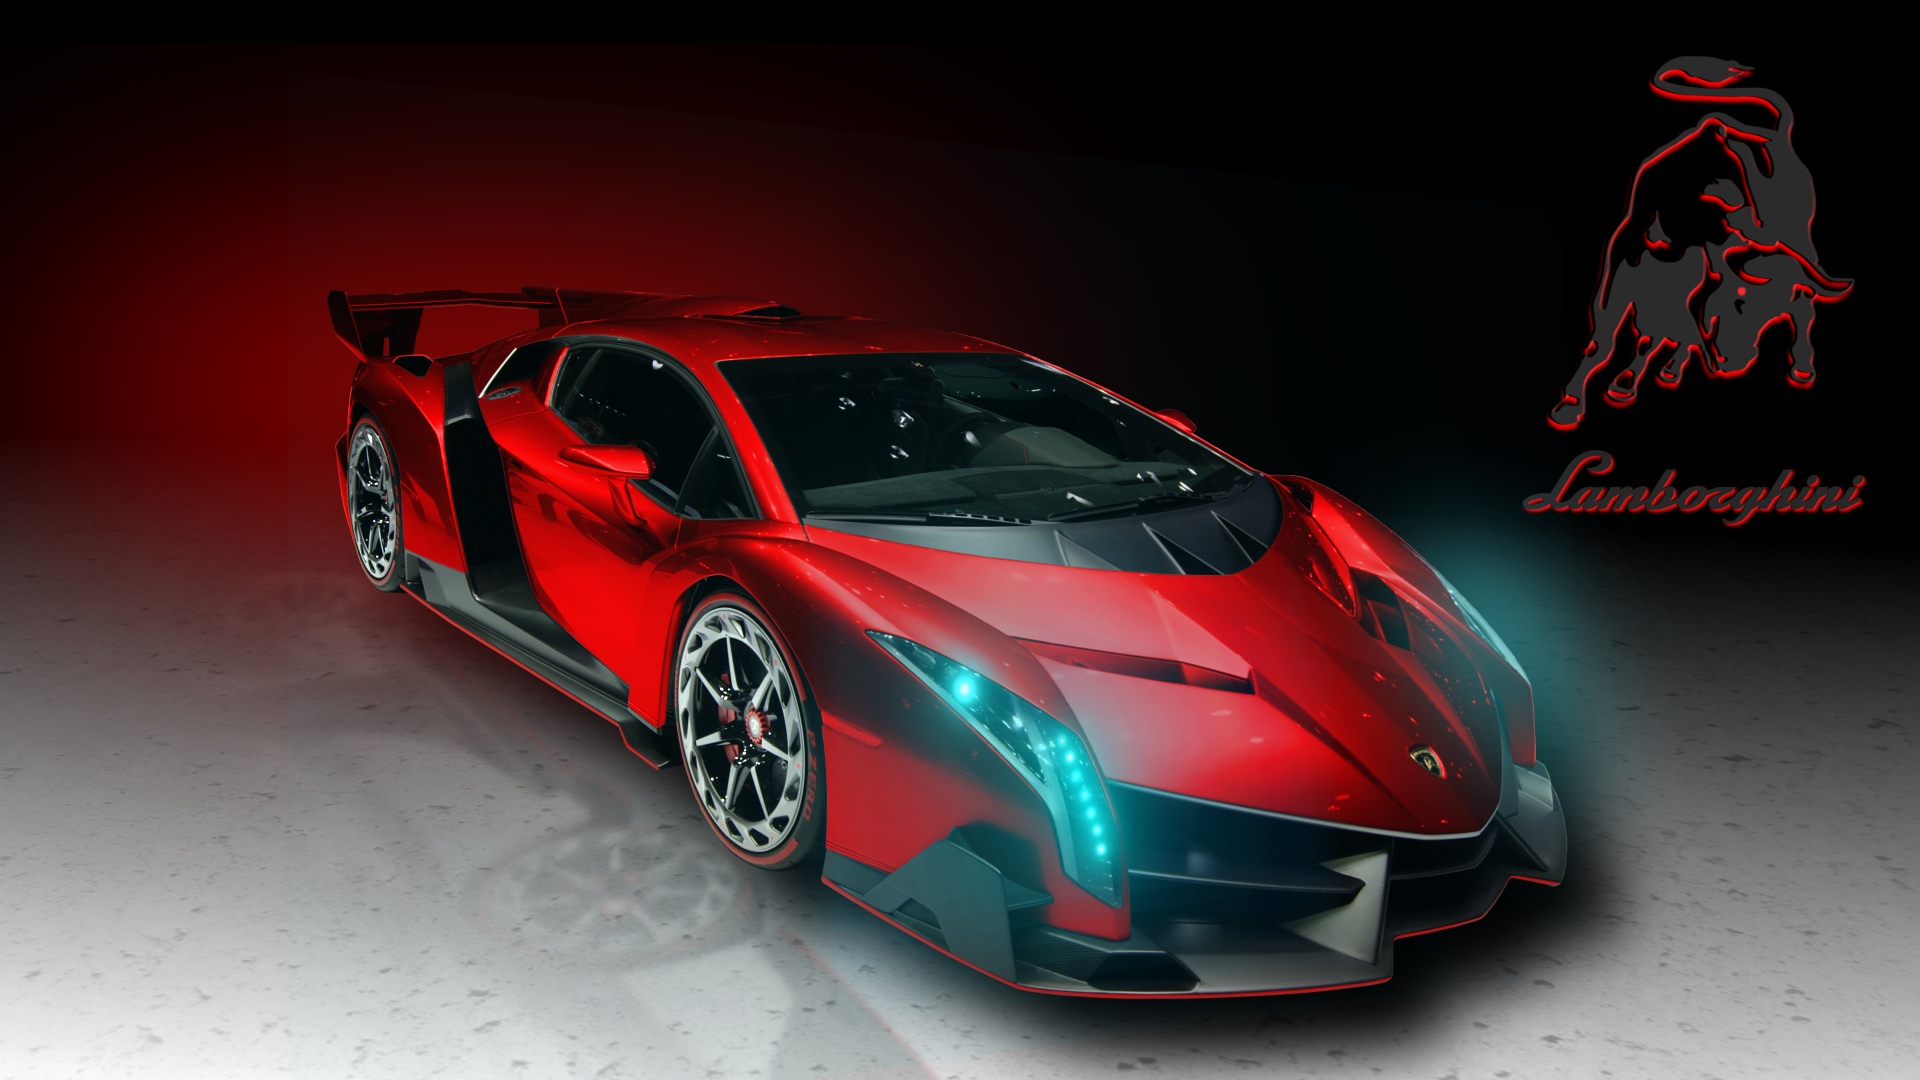 Lamborghini Veneno Wallpapers Free Download  PixelsTalk.Net